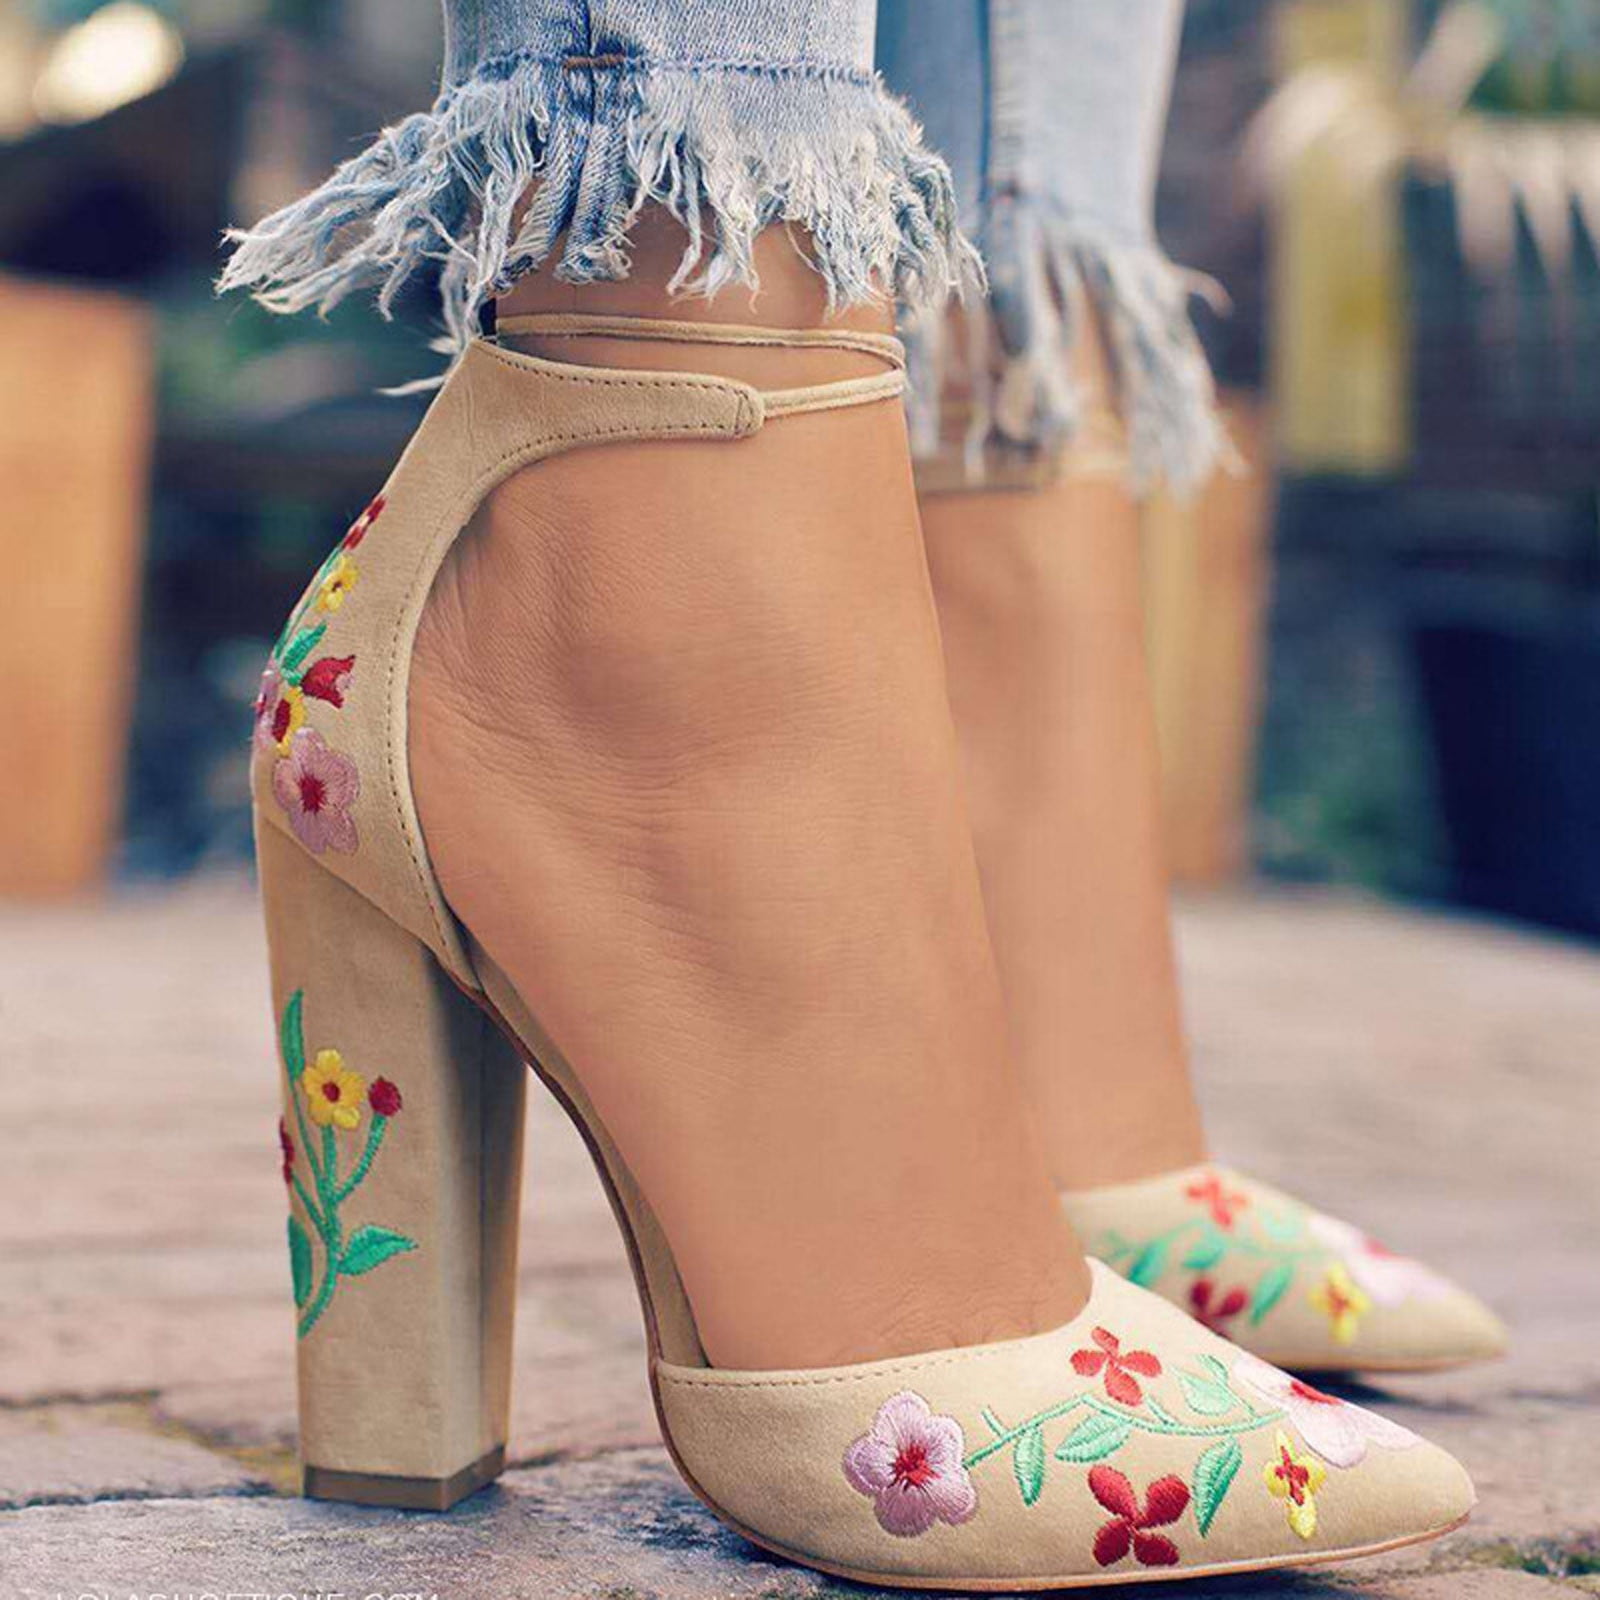 Lib Peep Toe Platforms Chunky Heels Slingback Floral Print Sandals - Blue  in Sexy Heels & Platforms - $65.99